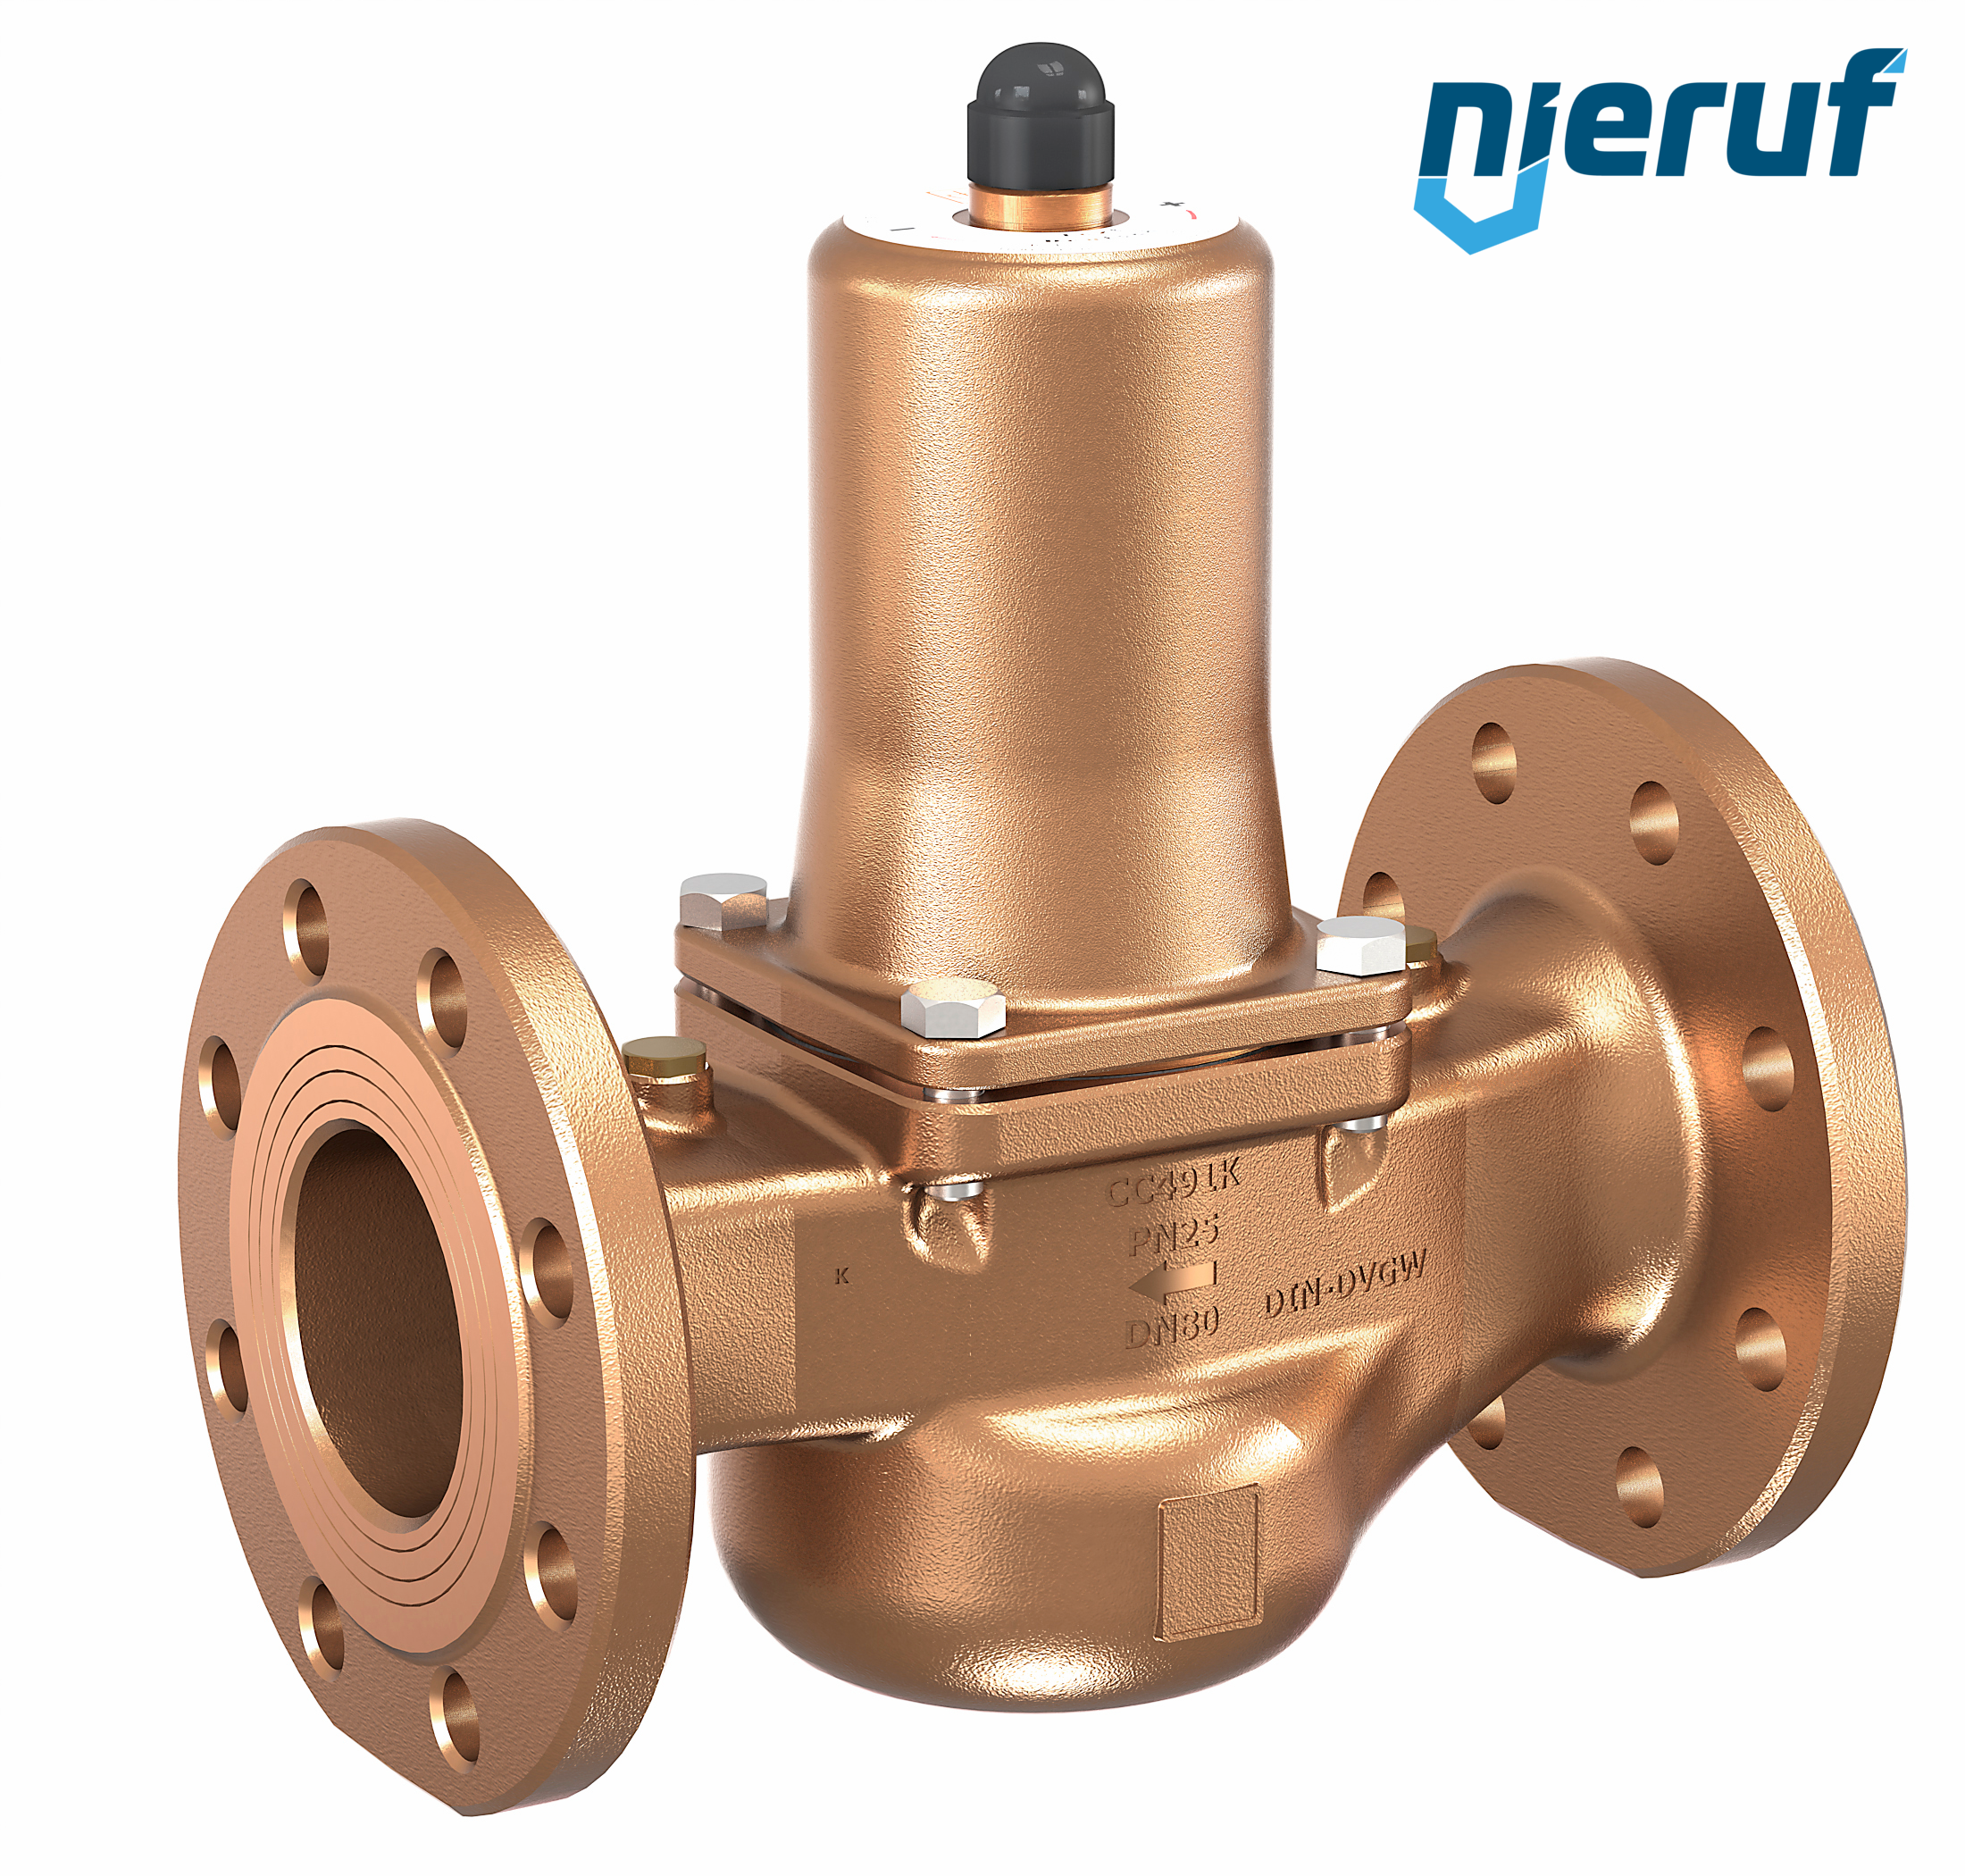 flange overflow valve DN 15 PN40 UV09 gunmetal/brass 5,5 - 10,0 bar